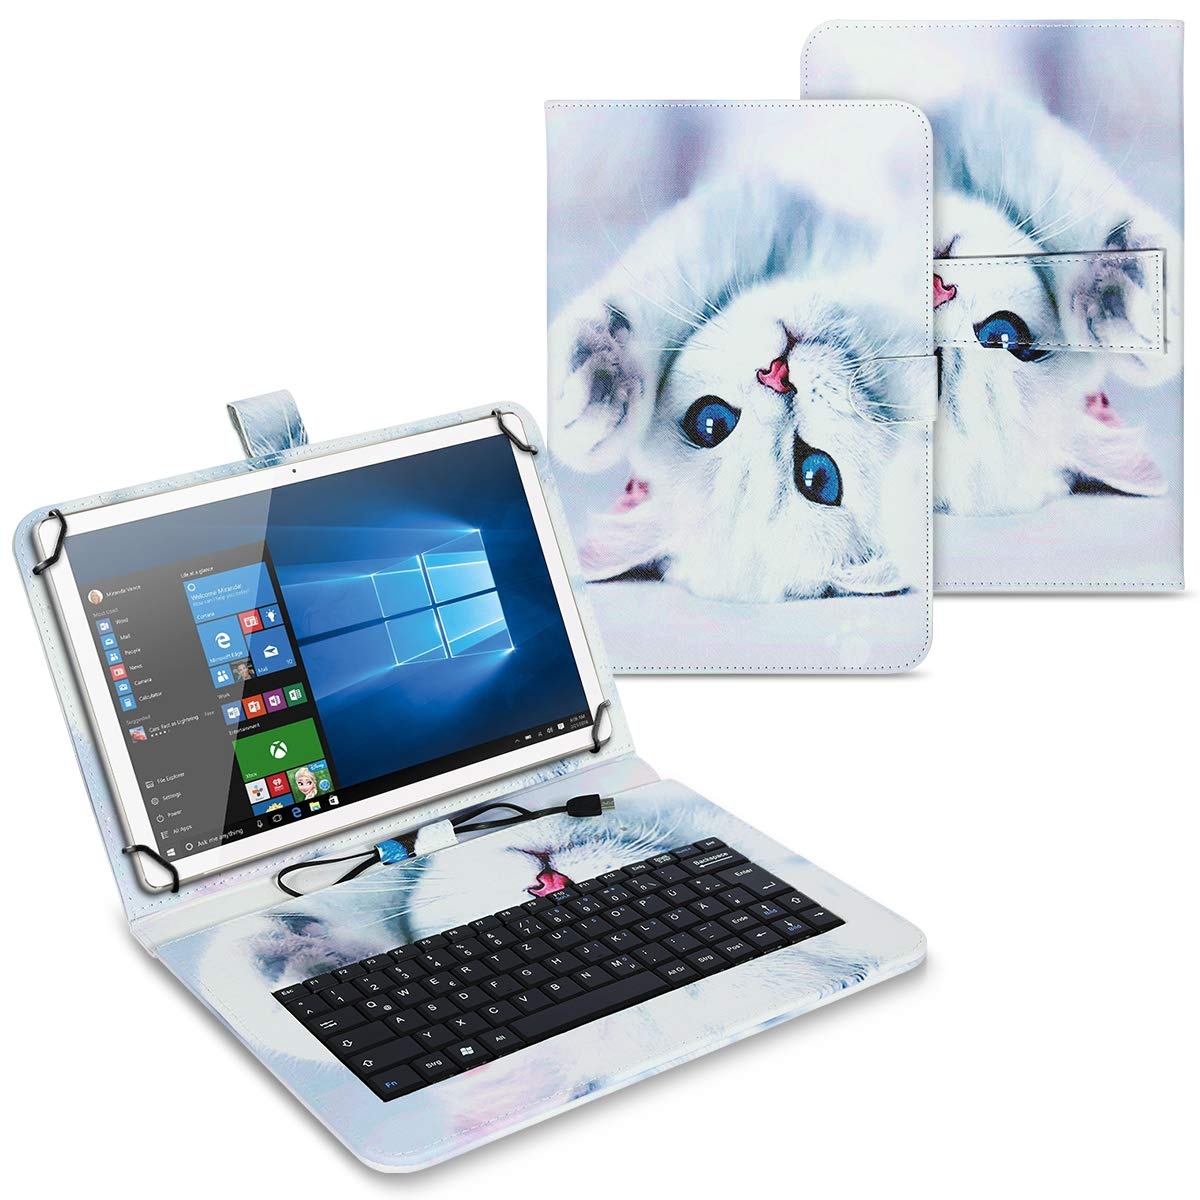 UC-Express Tablet Schutzhülle USB Tastatur - kompatibel mit Teclast T50 Allen 11 Zoll Geräten - 360 Grad Hülle für Tablets - ultradünne Tablettasche - Tablet QWERTZ Case, Farben:Motiv 2